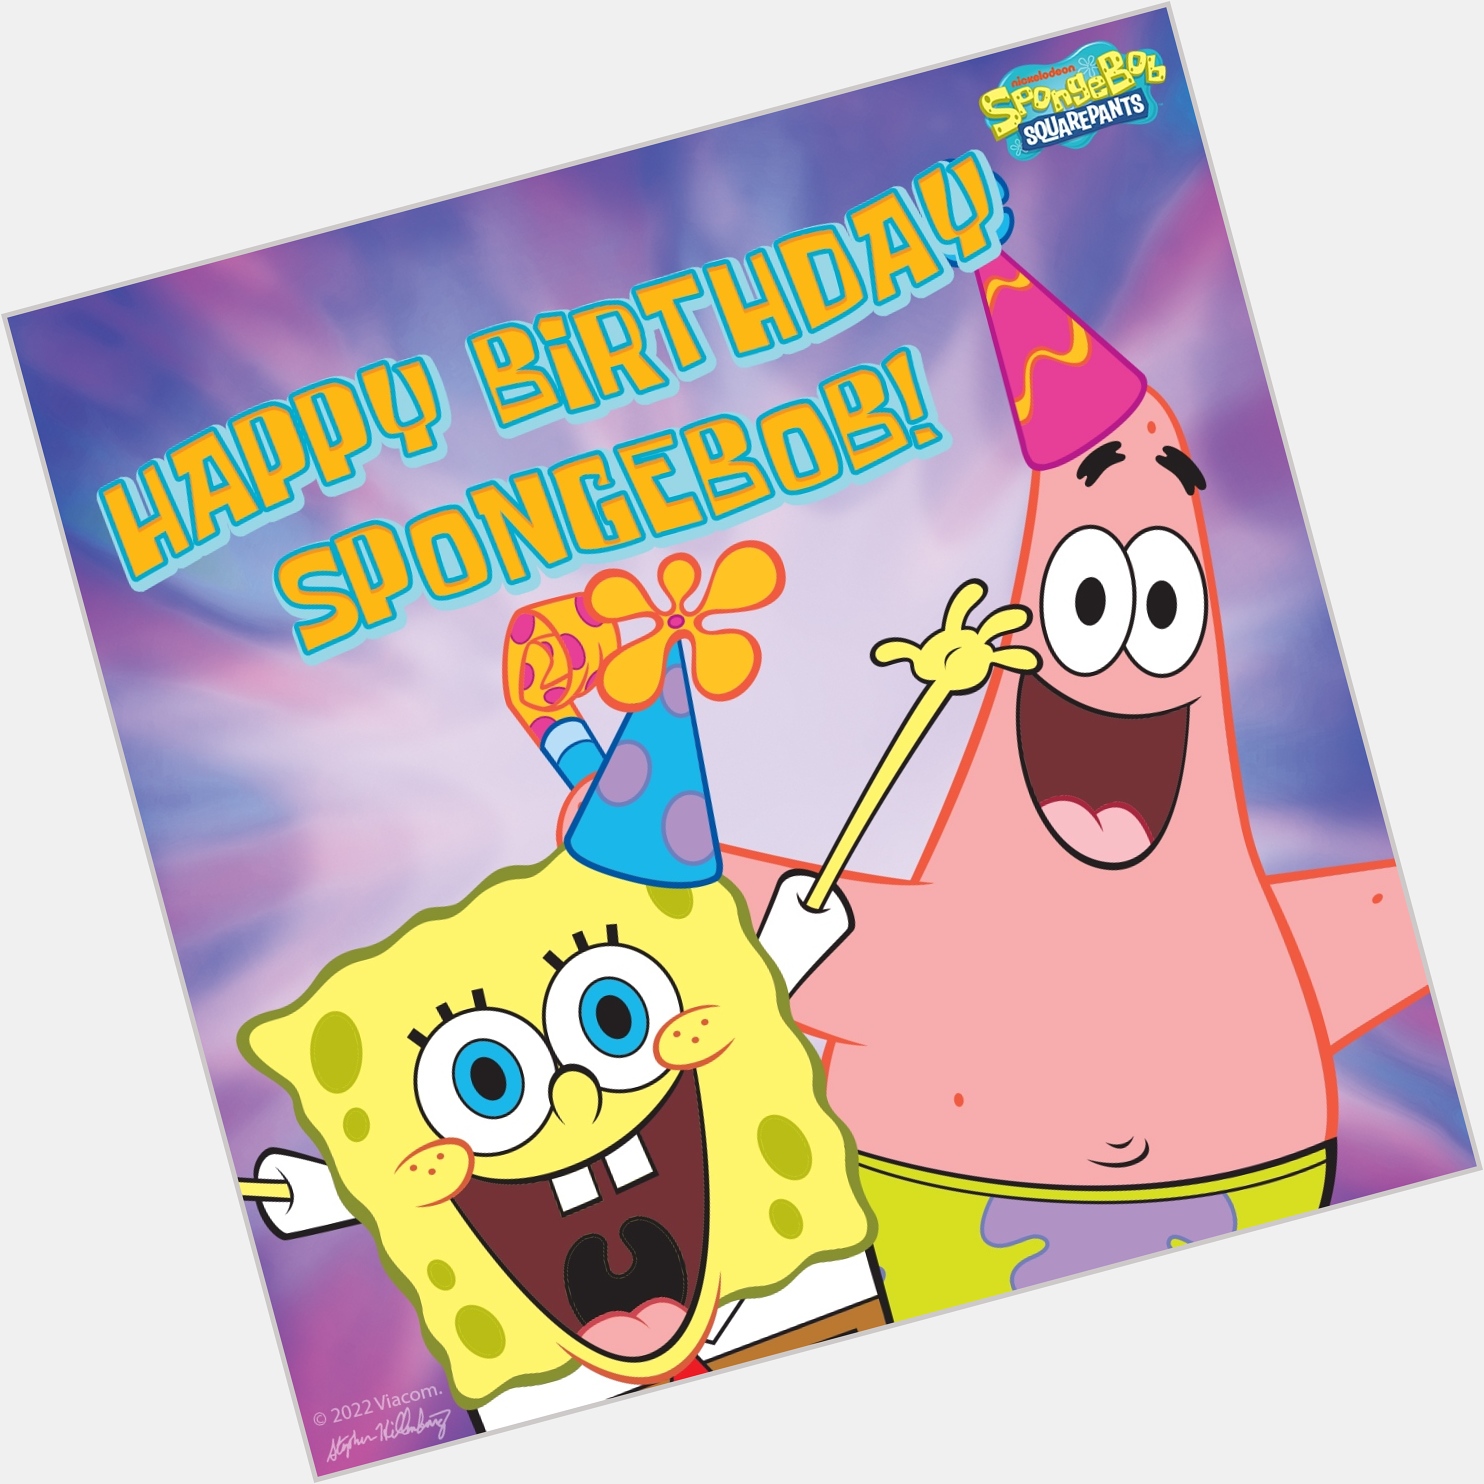 Happy Birthday to everyone\s favorite fry cook, SpongeBob SquarePants! 